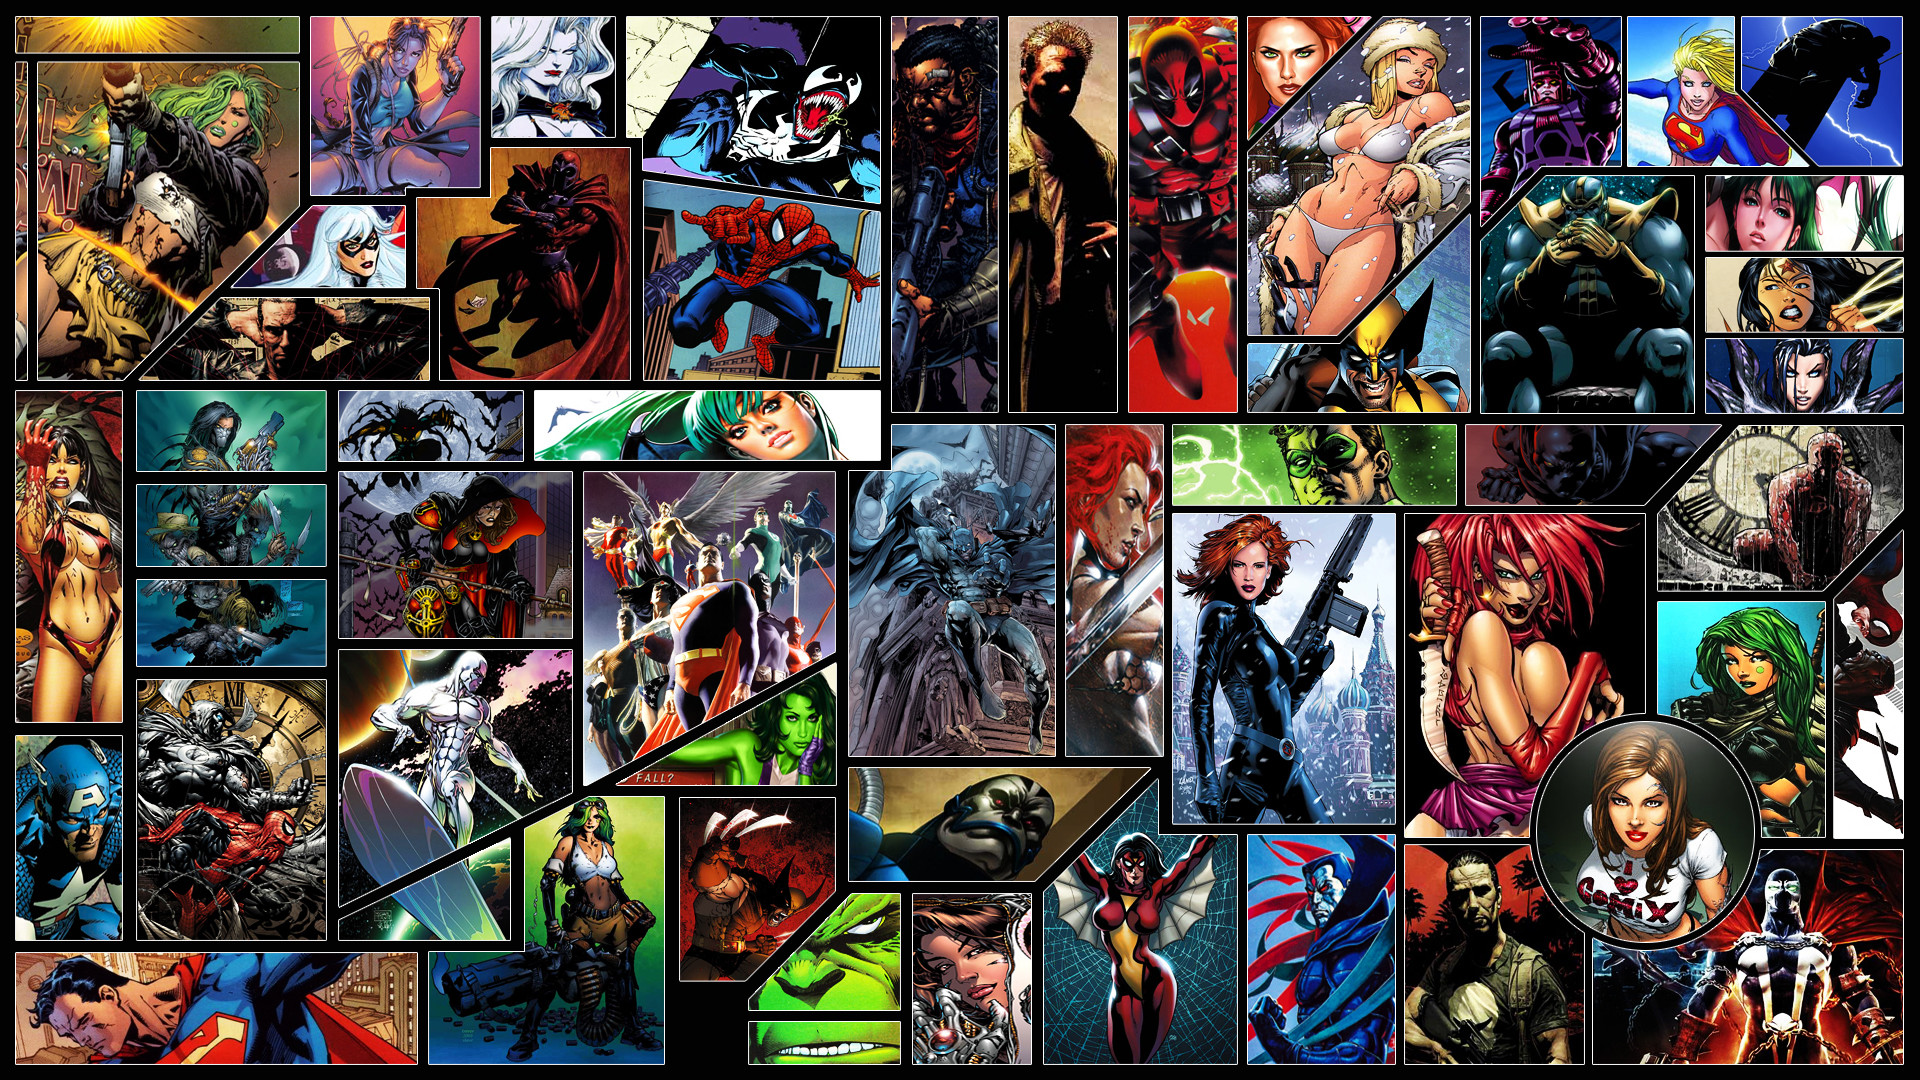 DС Vs Marvel Wallpaper (56+ images)